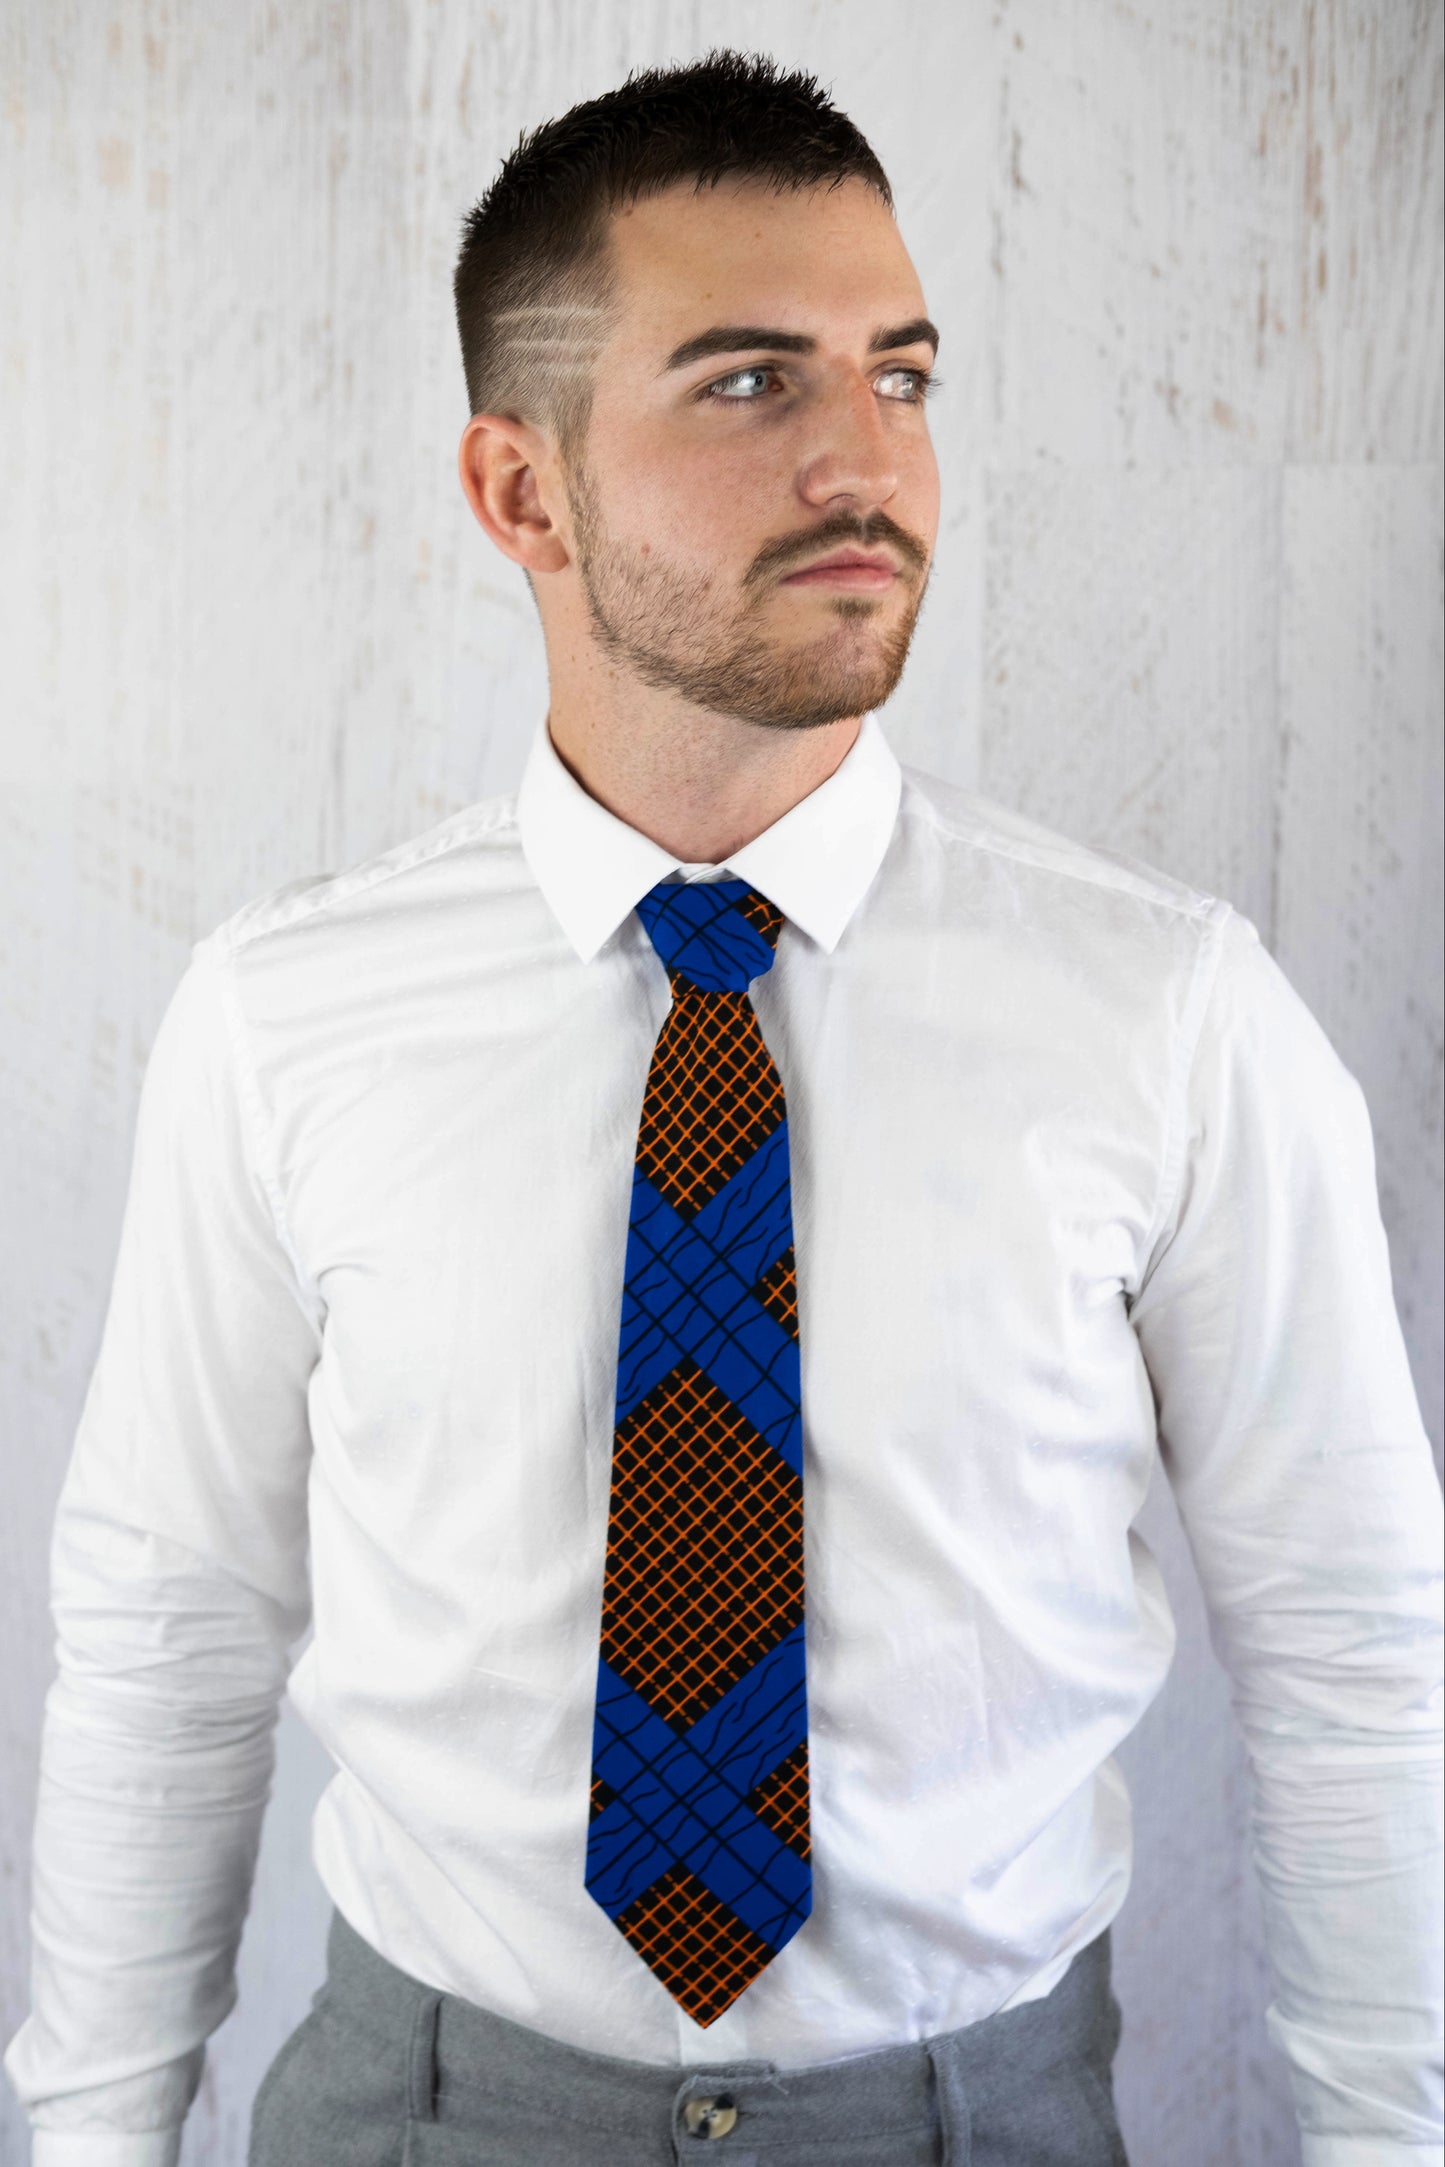 Blue and Orange Tie